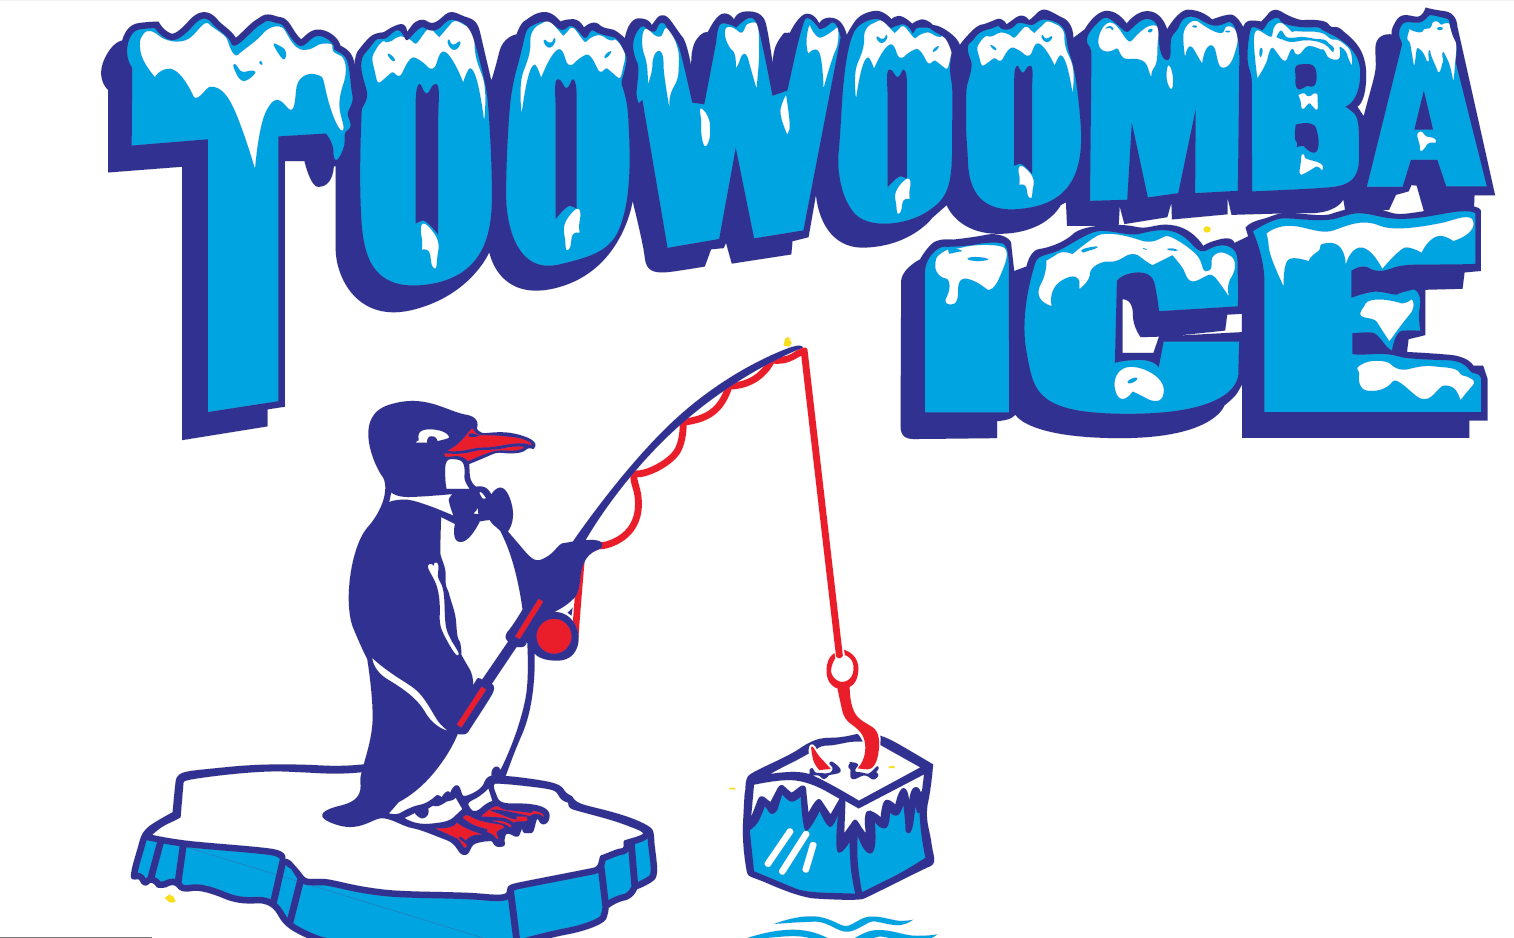 Toowoomba Ice